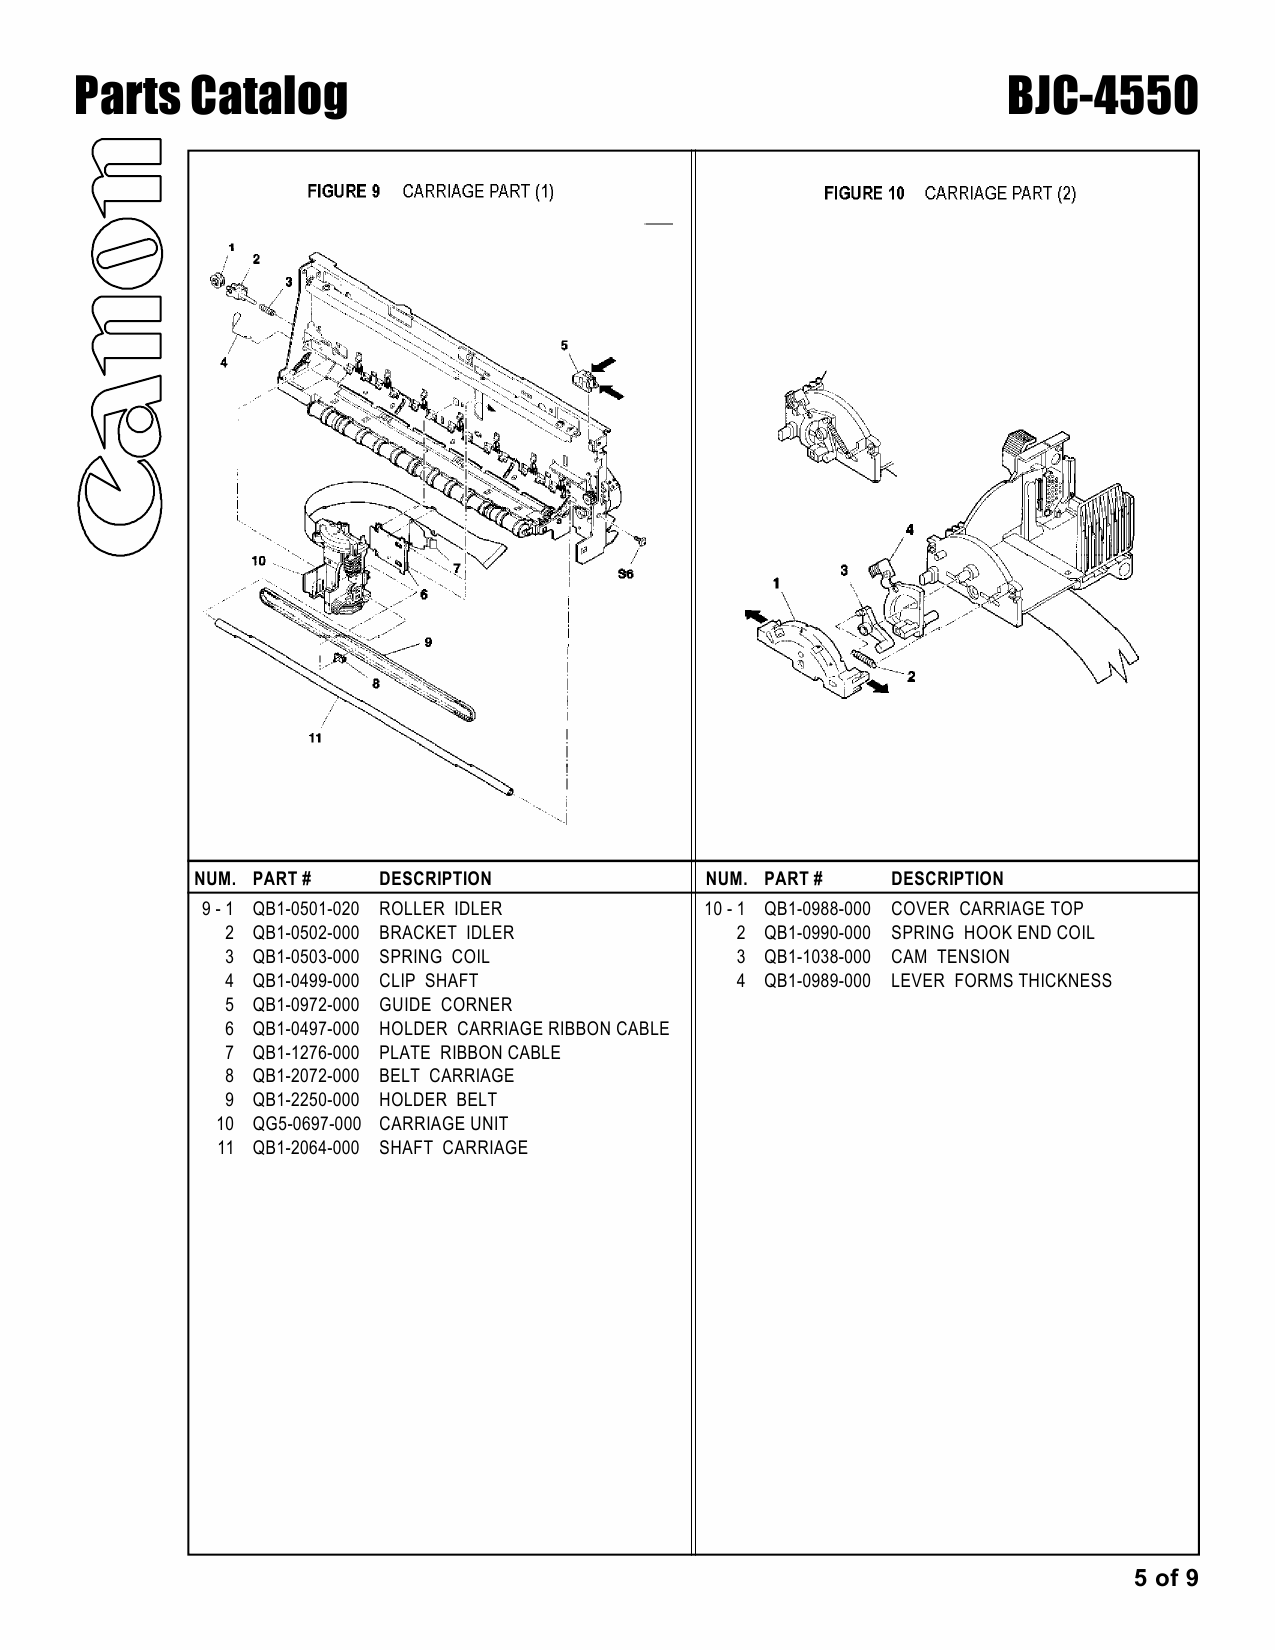 Canon BubbleJet BJC-4550 Parts Catalog Manual-5